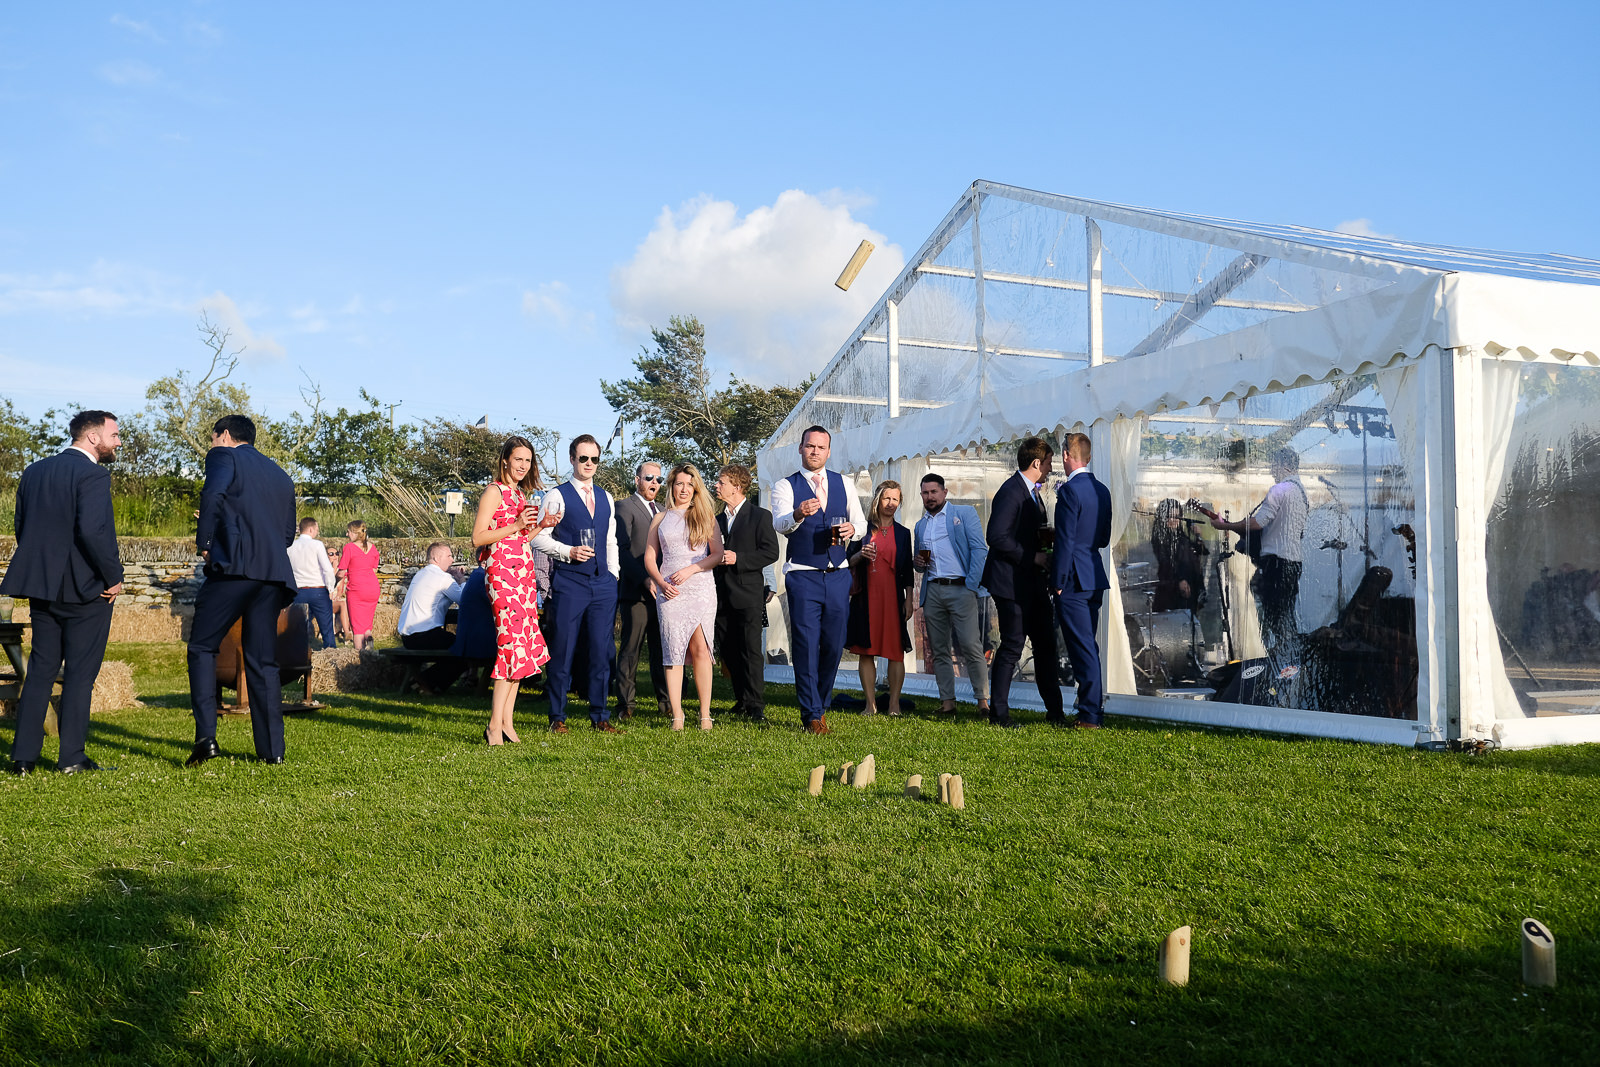 Roscarrock Farm wedding in Cornwall 075.jpg